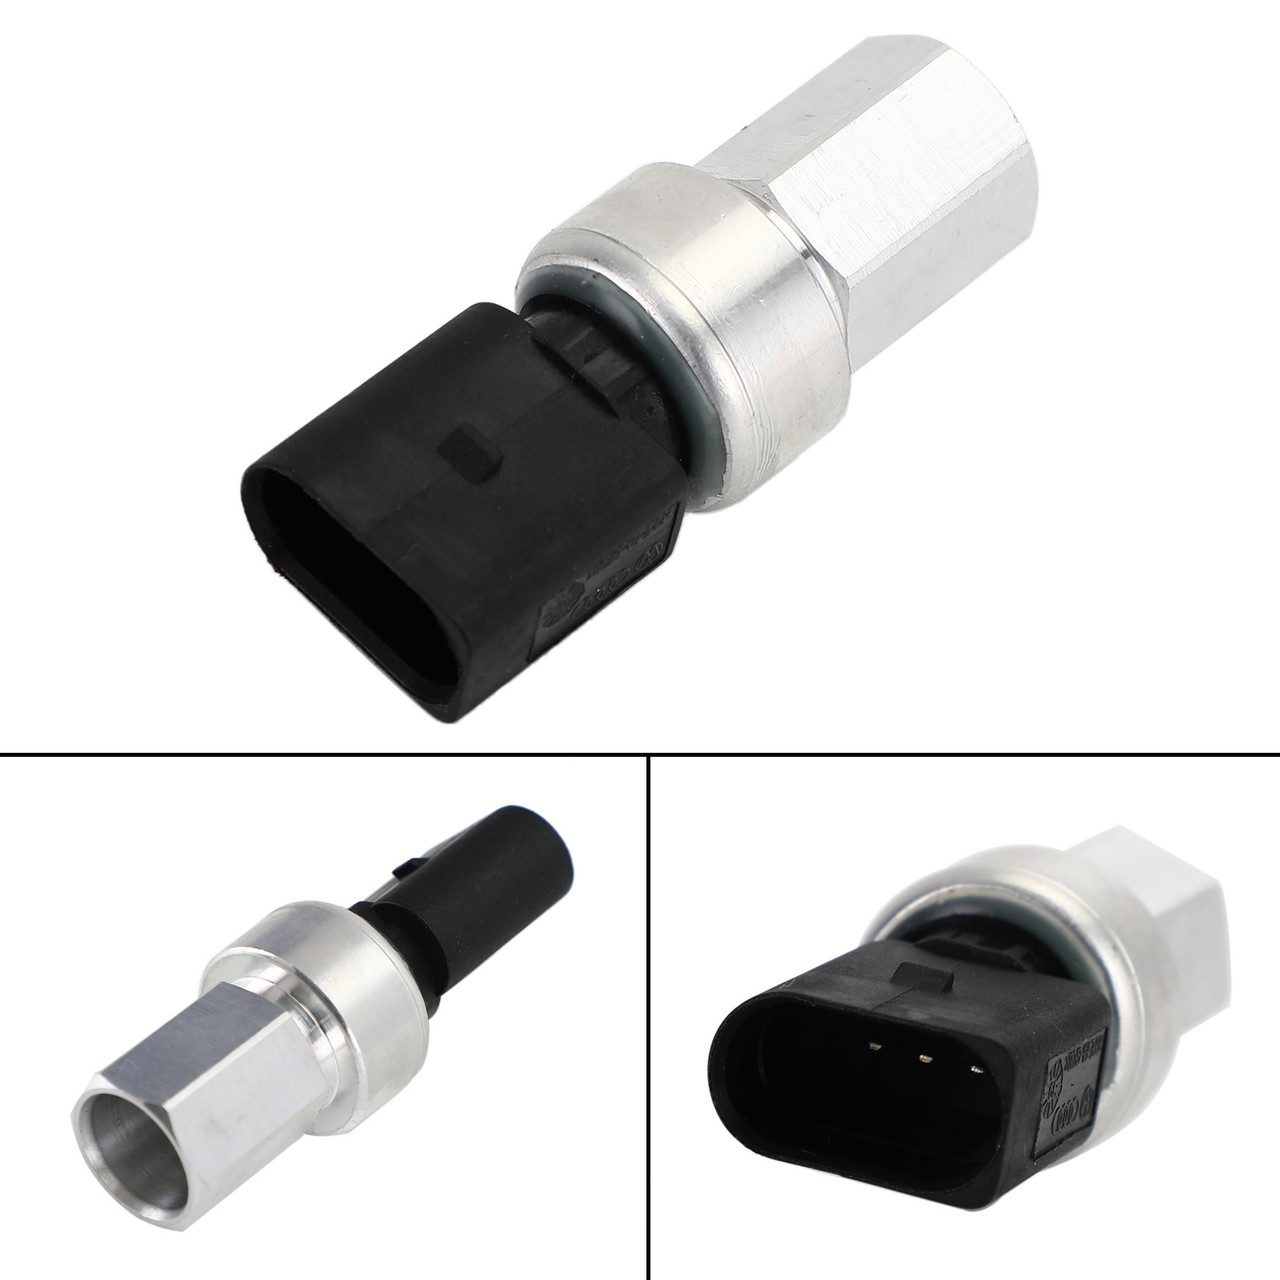 A/C Pressure Switch Sensor Fit for VW Beetle 5C 11-19 Bora 1J 98-05 Caddy 2K 04-10 2C 10-15 SA 15-20 Golf MK4 98-05 Jetta 1K 06-10 Sharan 7M 95-10